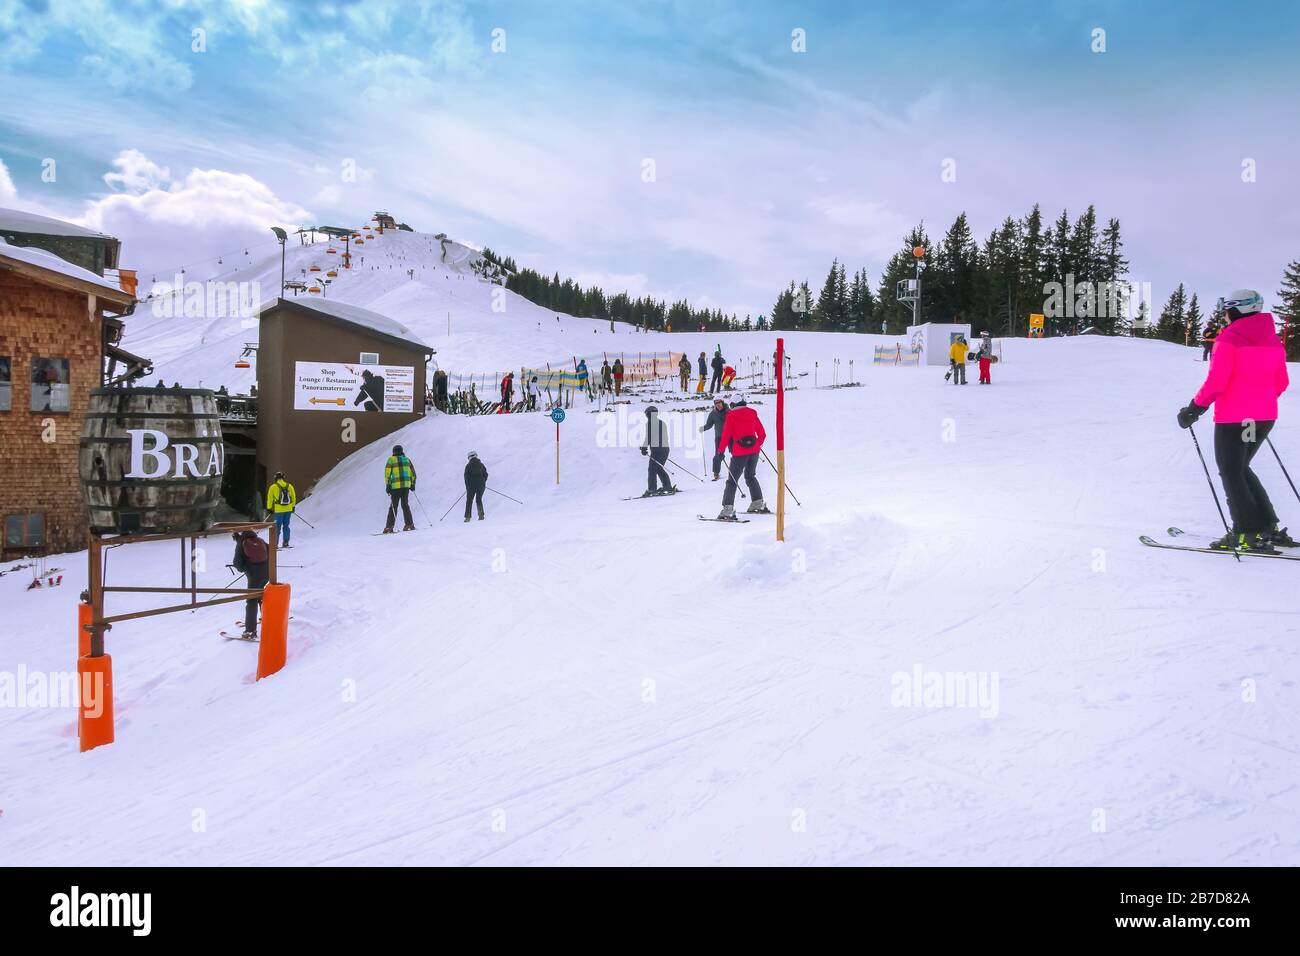 Saalbach-Hinterglemm, Austria - March 2, 2020: People skiing at ski slope and big barrel Stock Photo